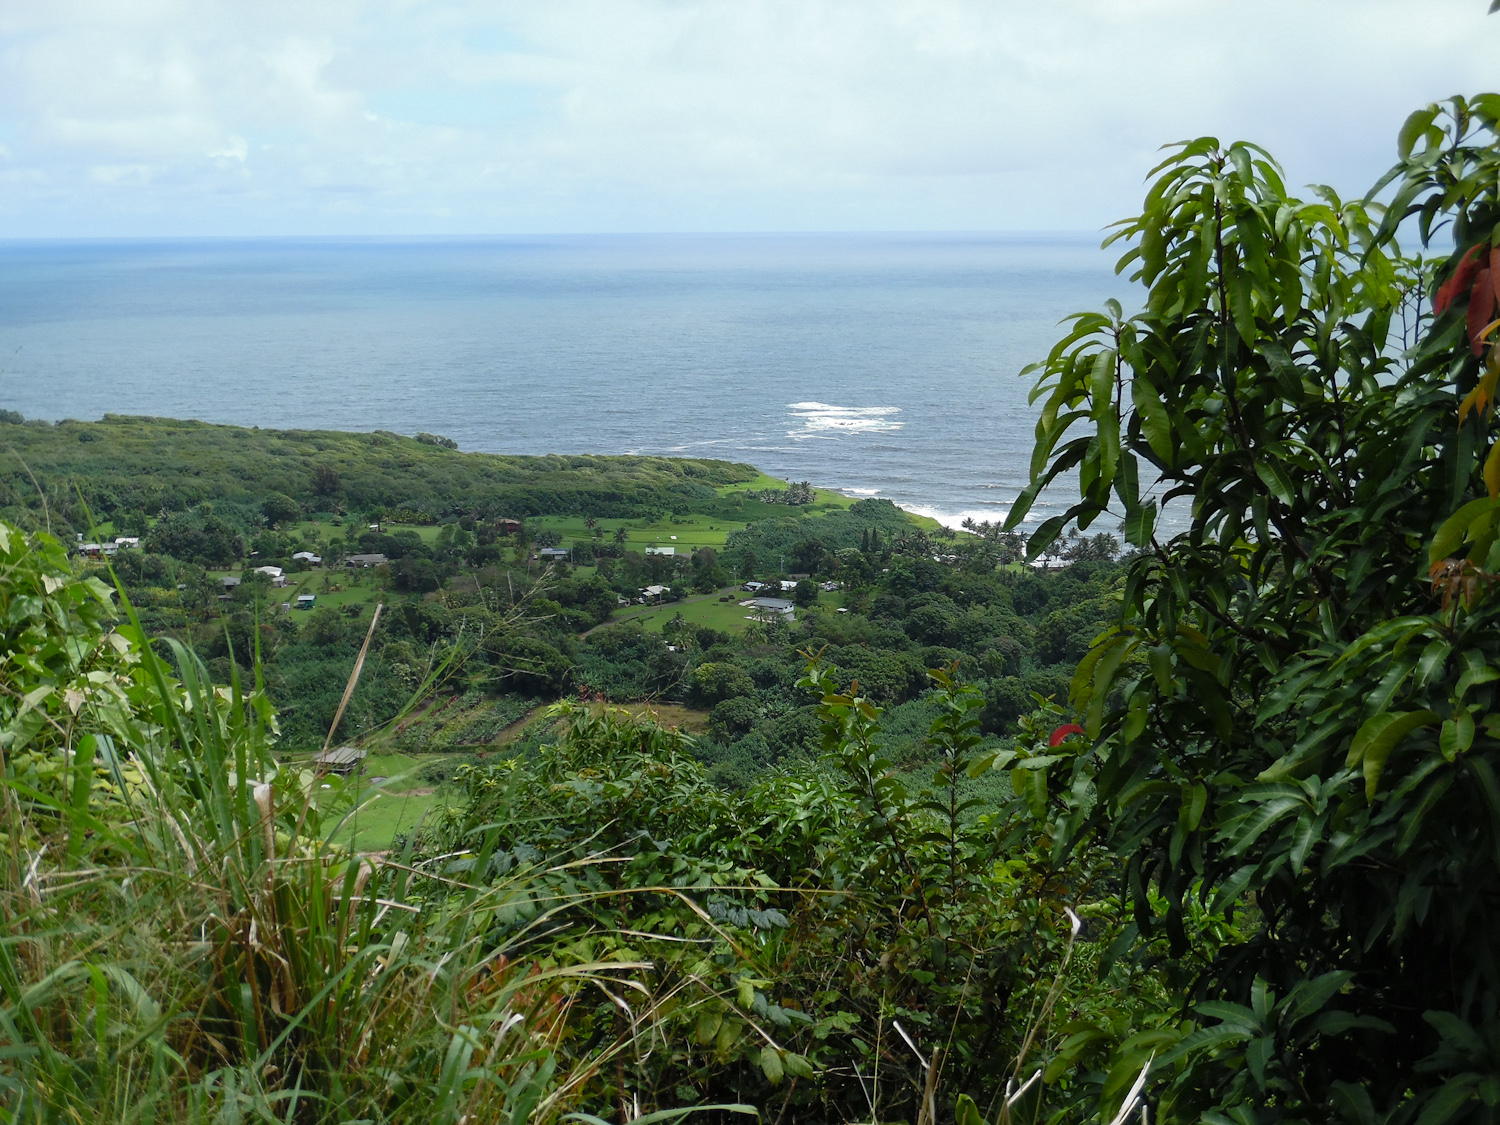 Views of Wailua Nui Bay from Hana Highway